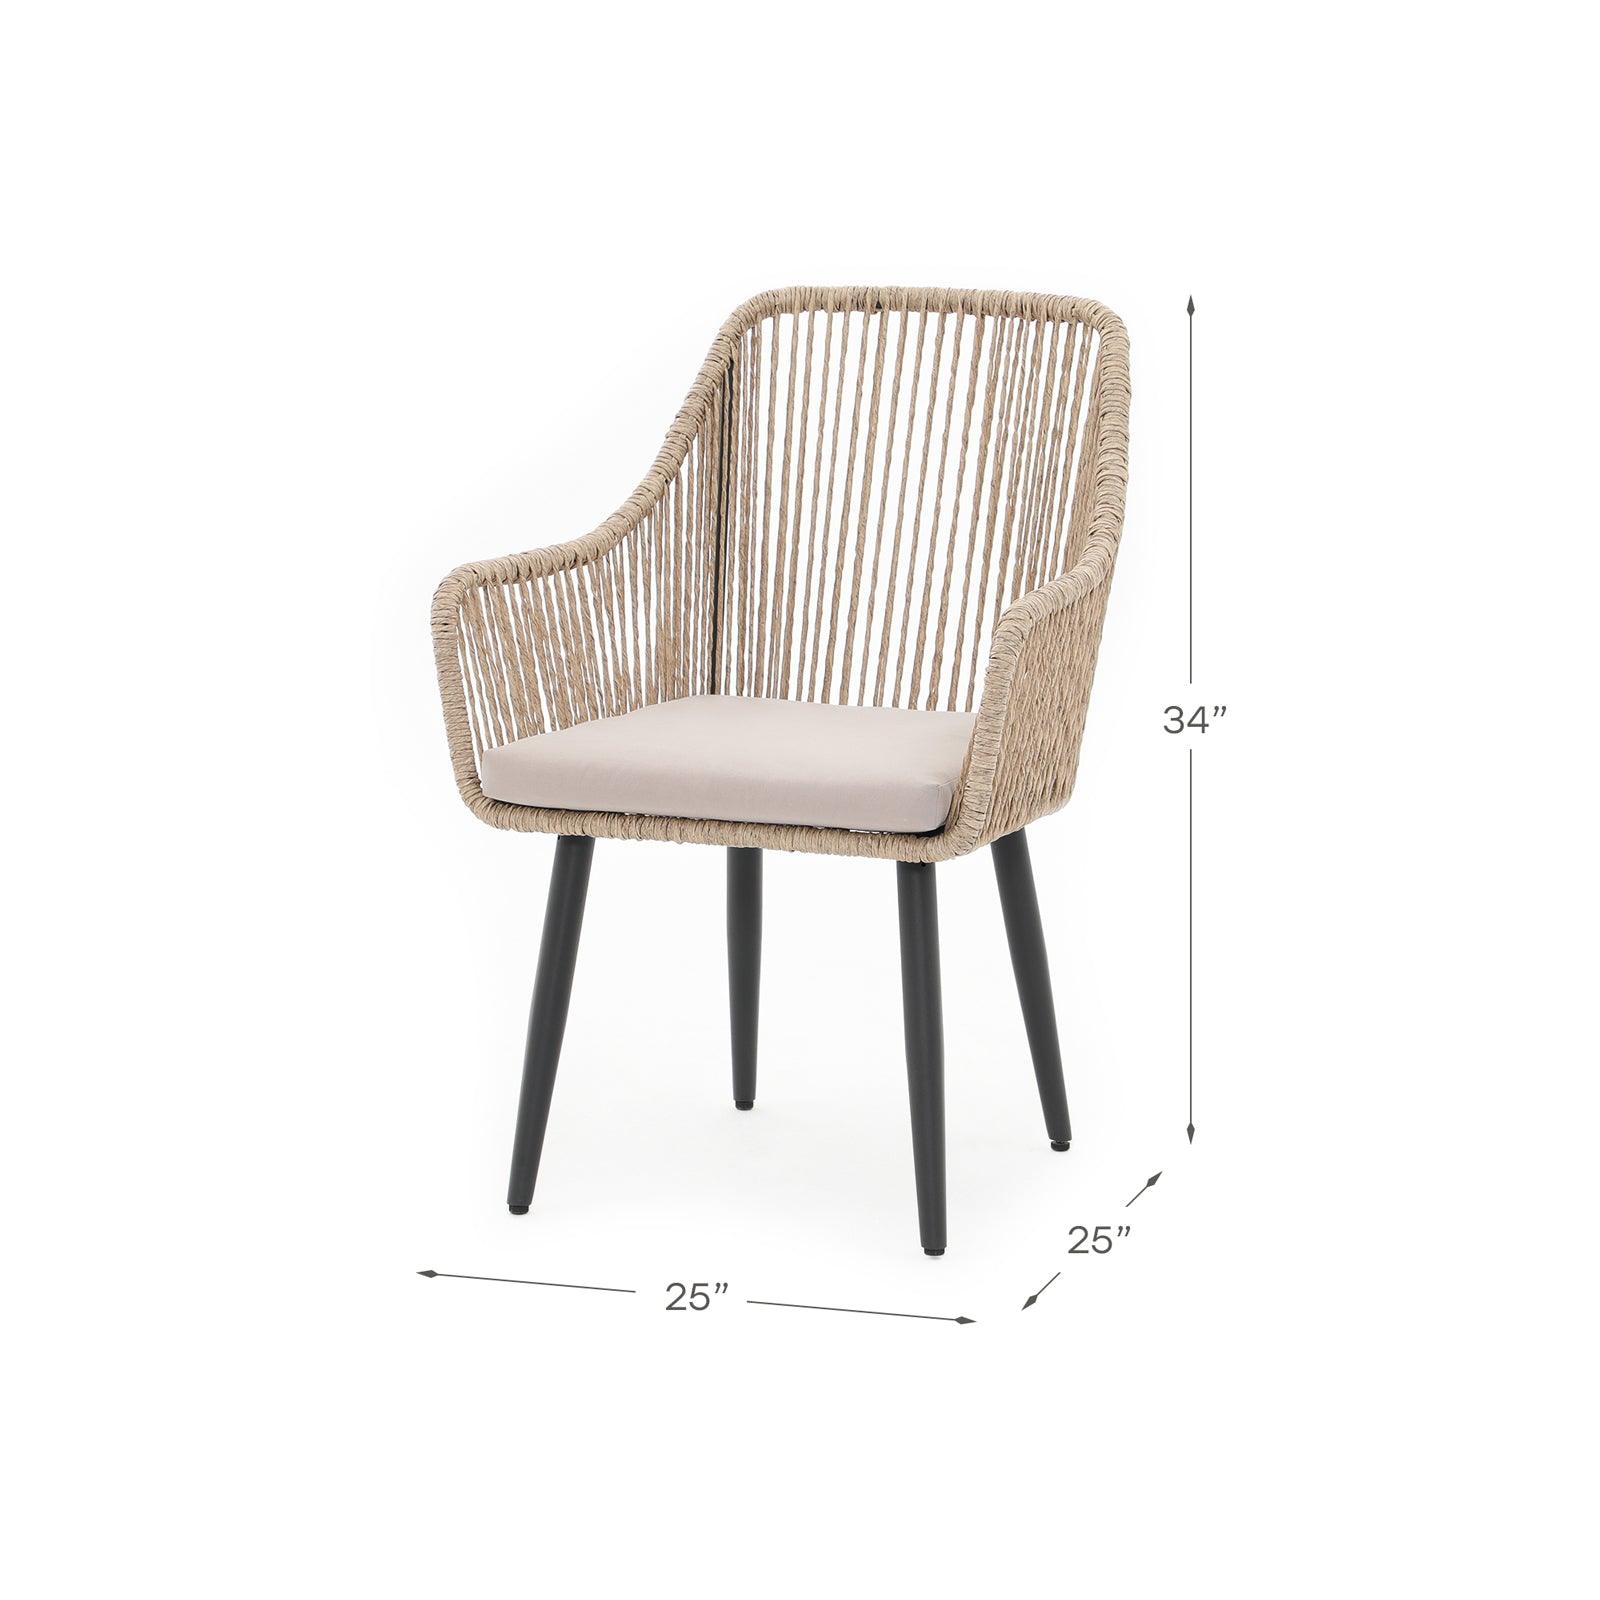 Hallerbos outdoor Dining Chair dimension - Jardina Furniture